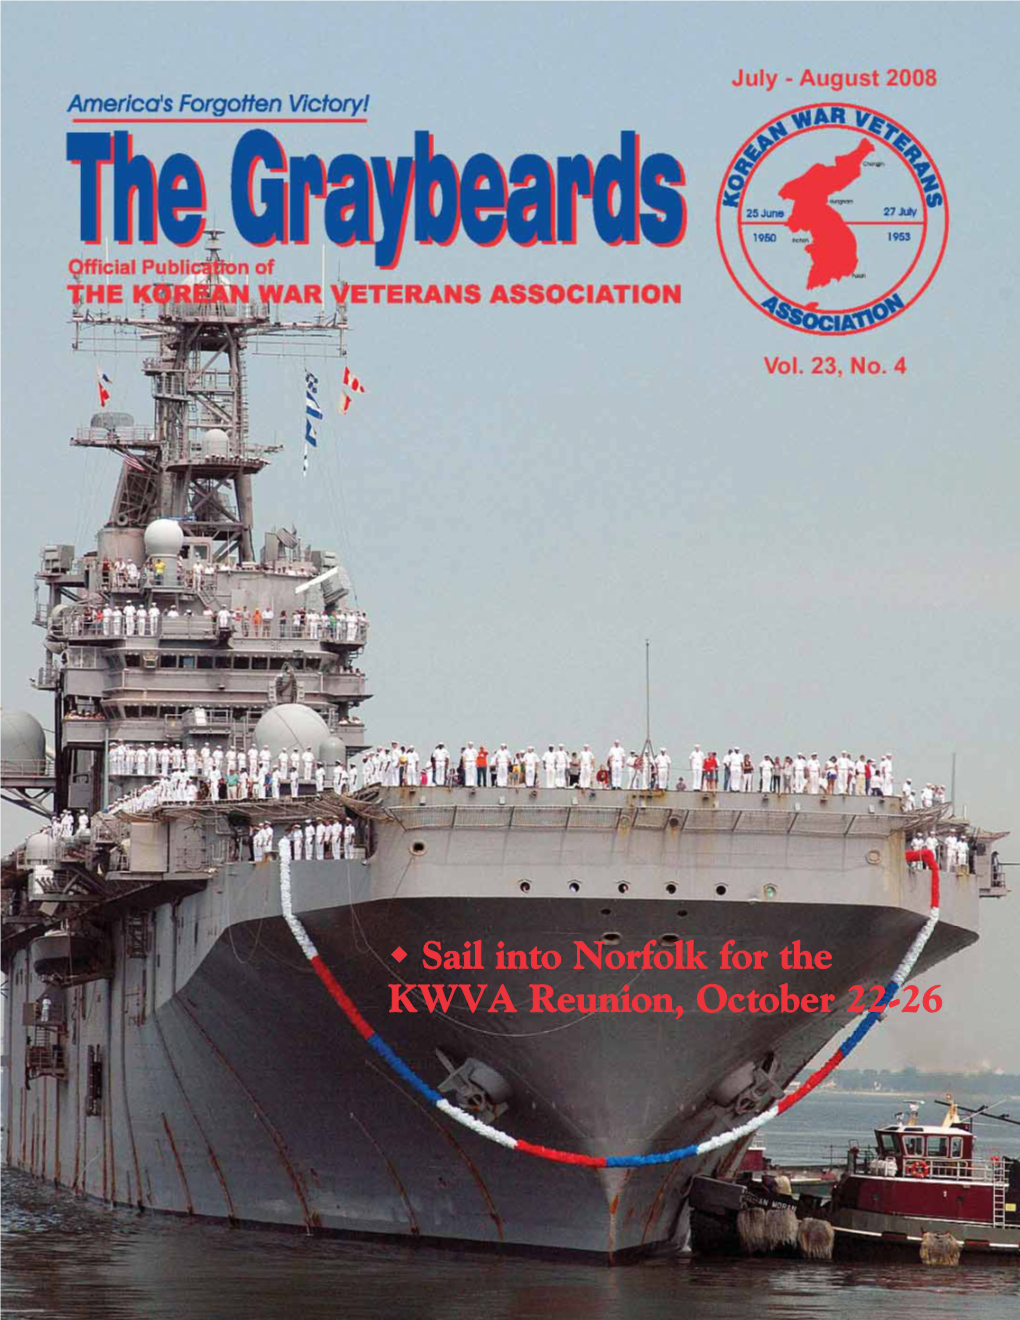 The Graybeards Is the Official Publication of the Korean War Veterans Association (KWVA)